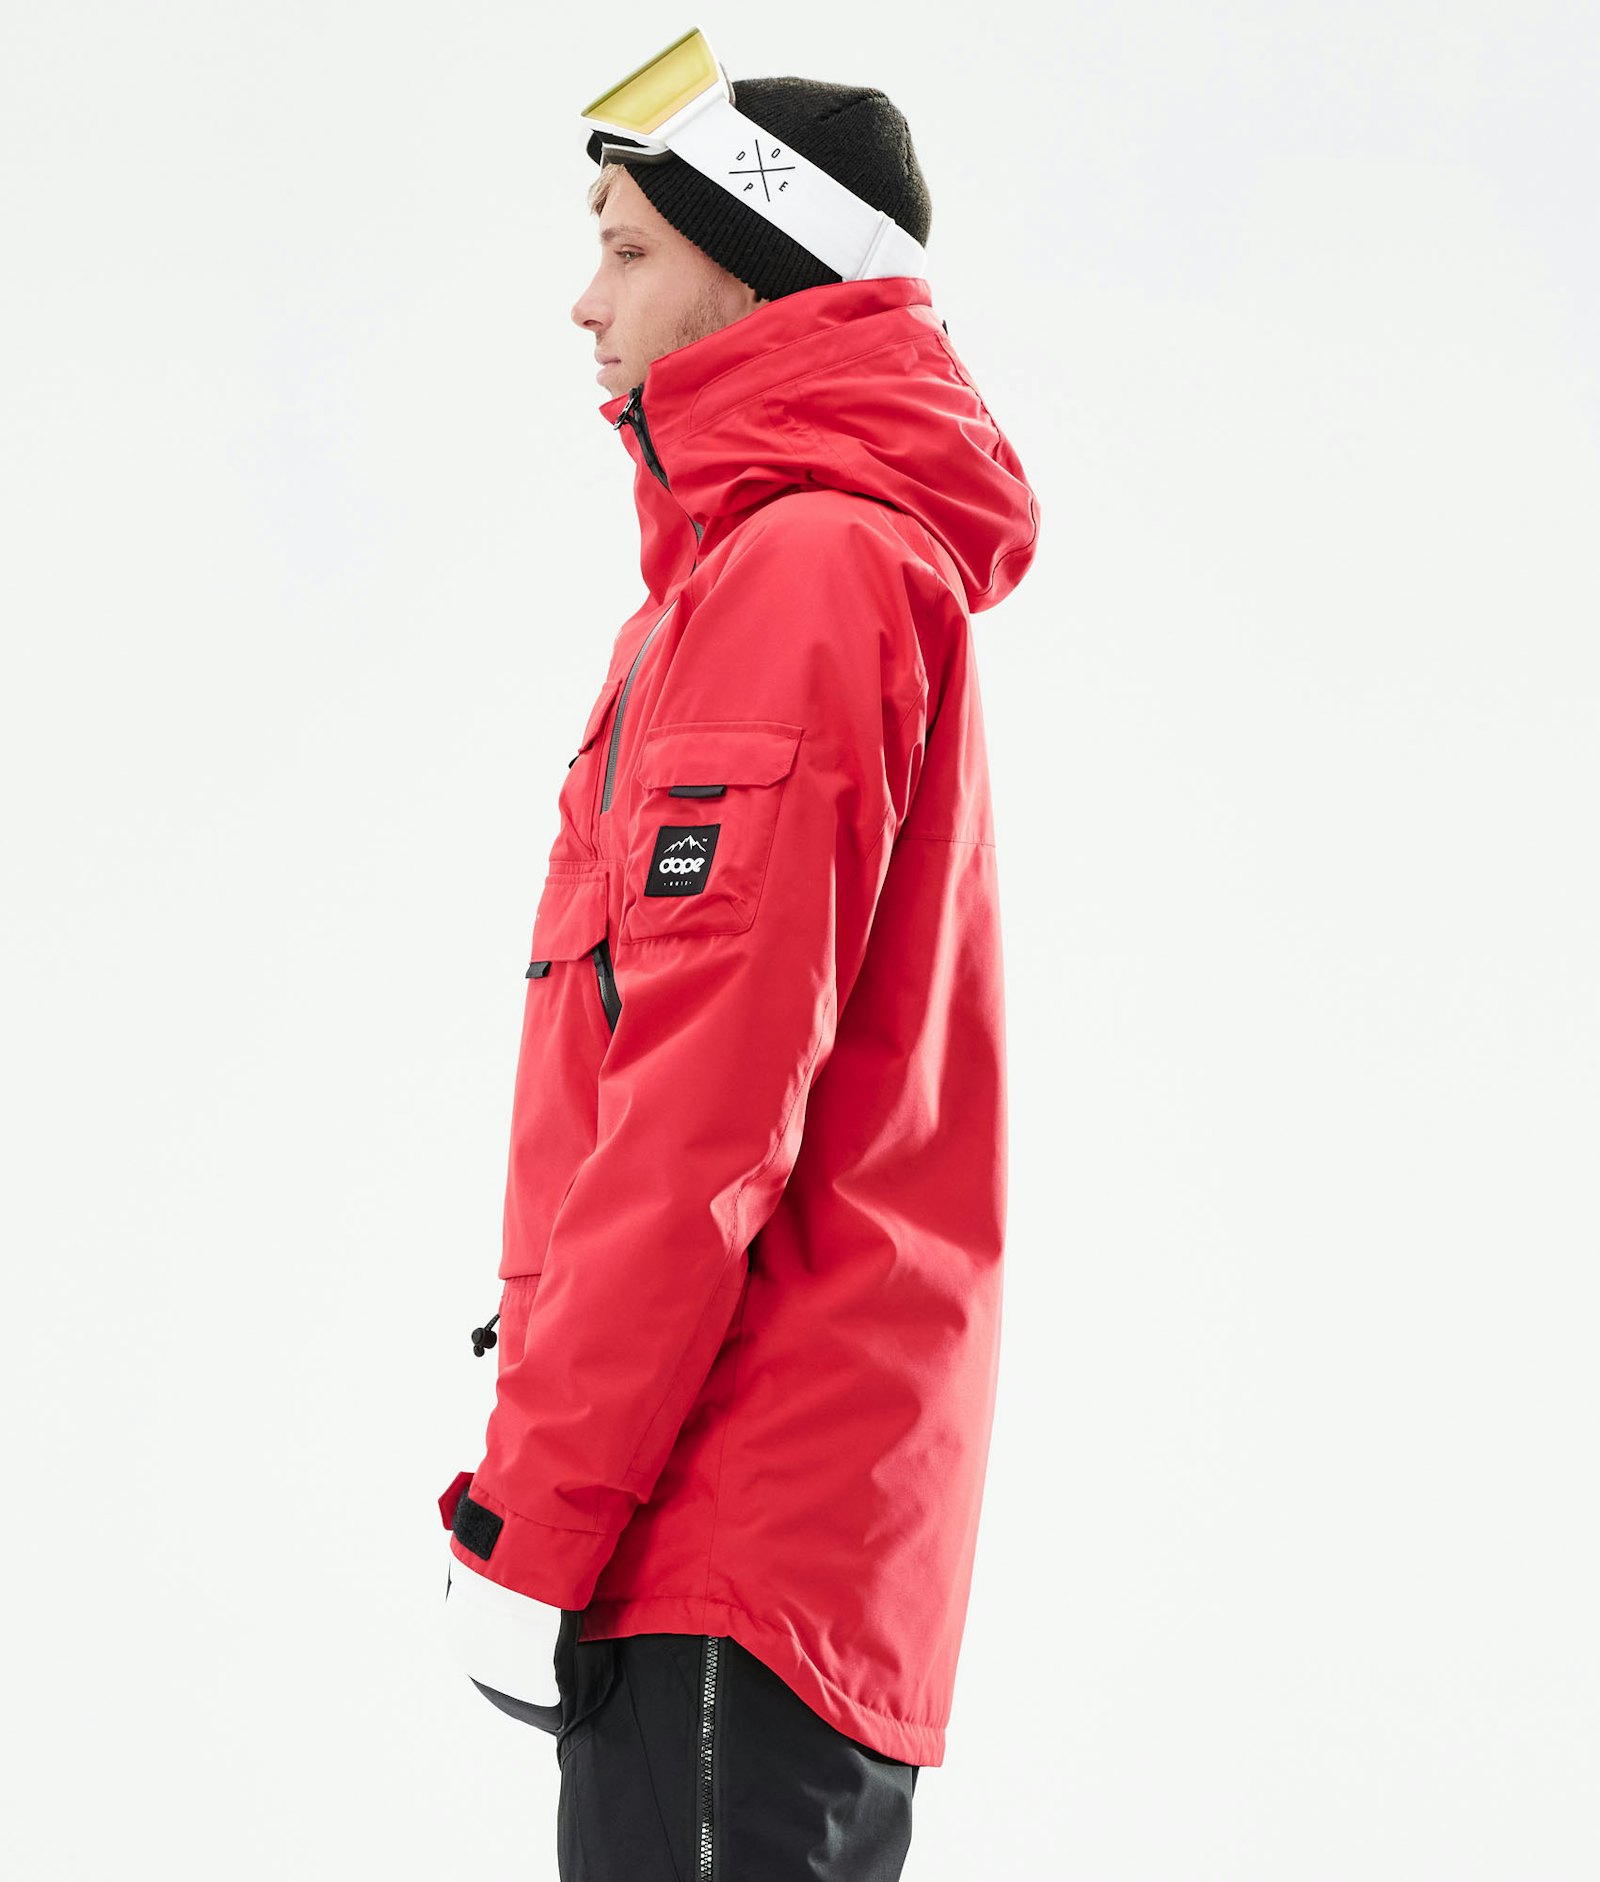 Akin 2020 Veste Snowboard Homme Red